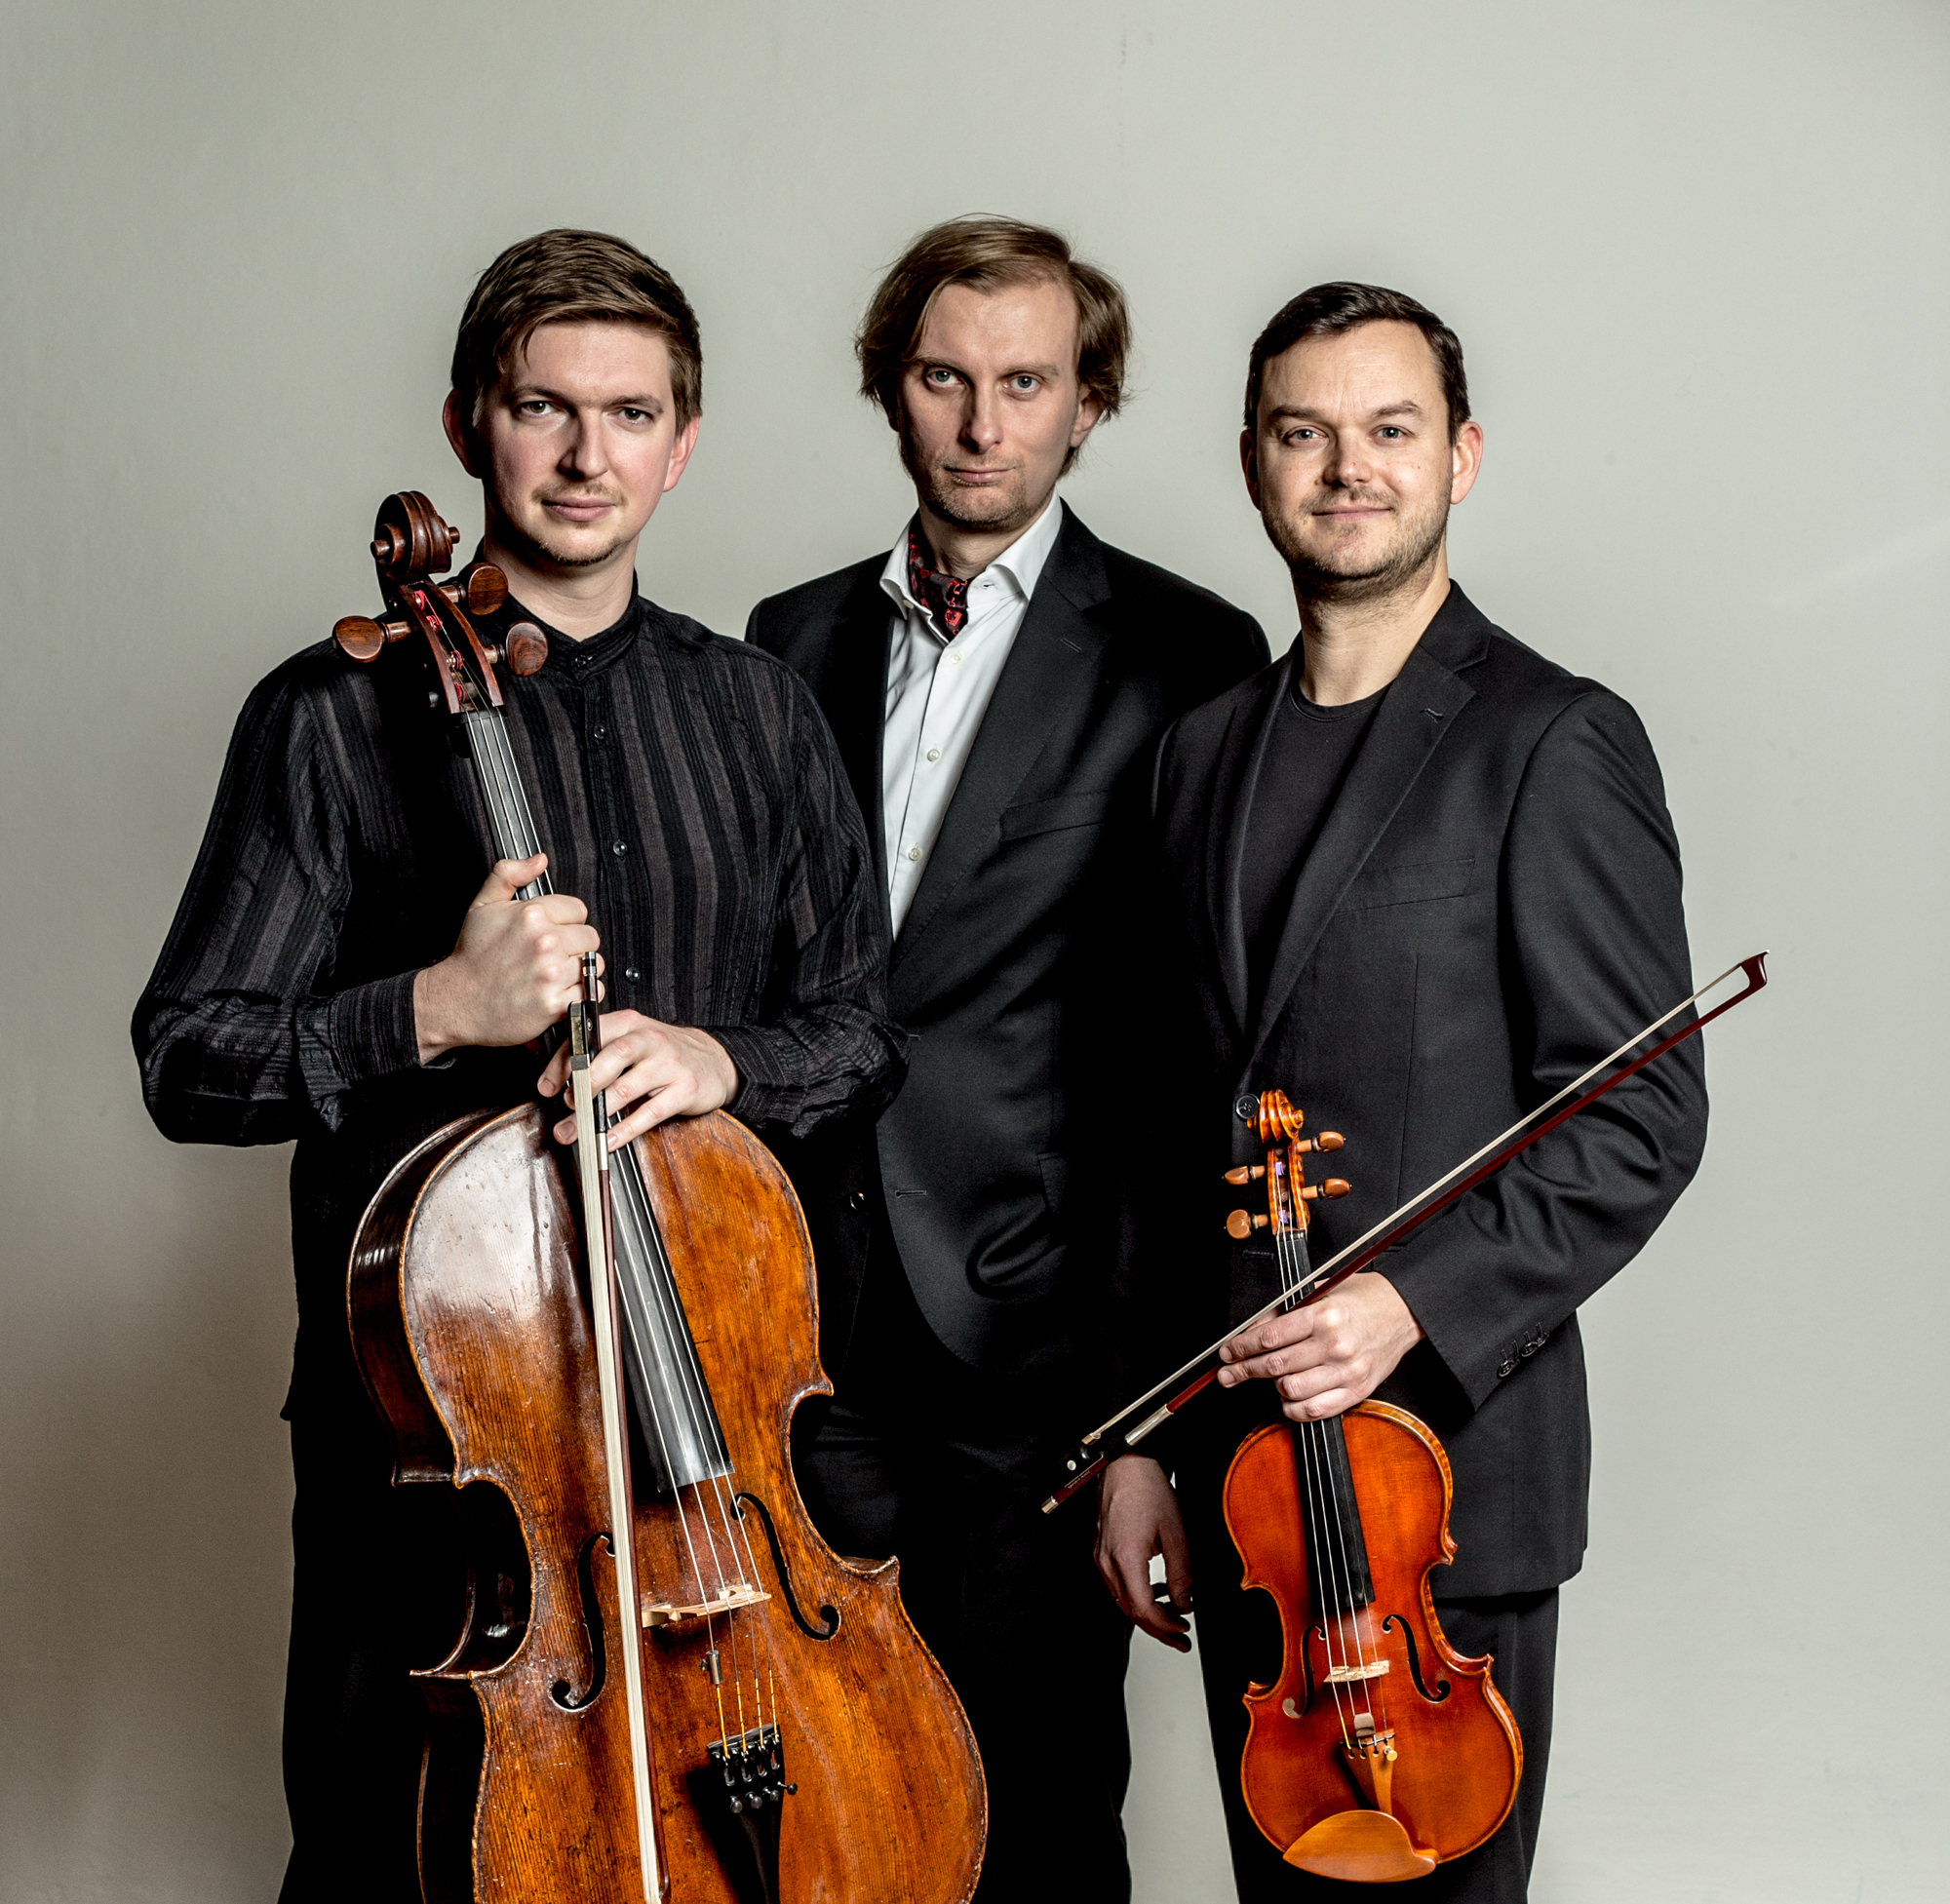 The Dvořák Trio